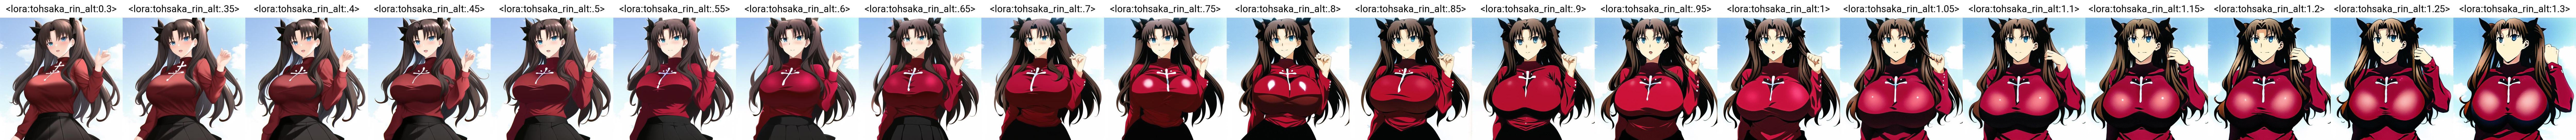 Rin Tohsaka (Older/Fanart) - Fate Series image by knxo